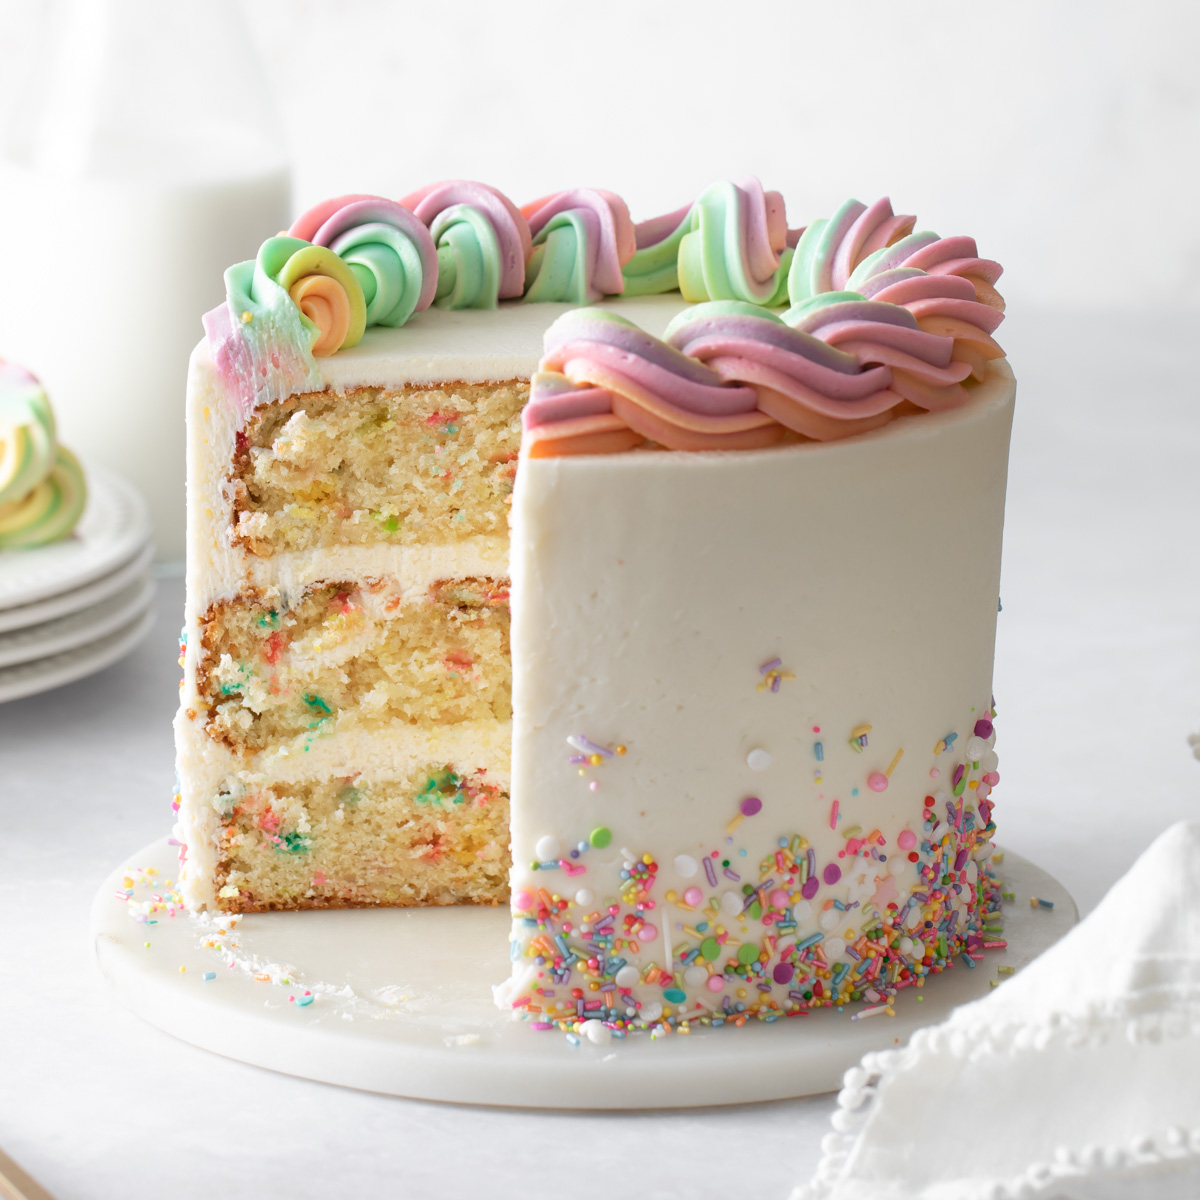 Send Cakes to Australia | Cakes Delivery Melbourne - Sydney | 1800GP